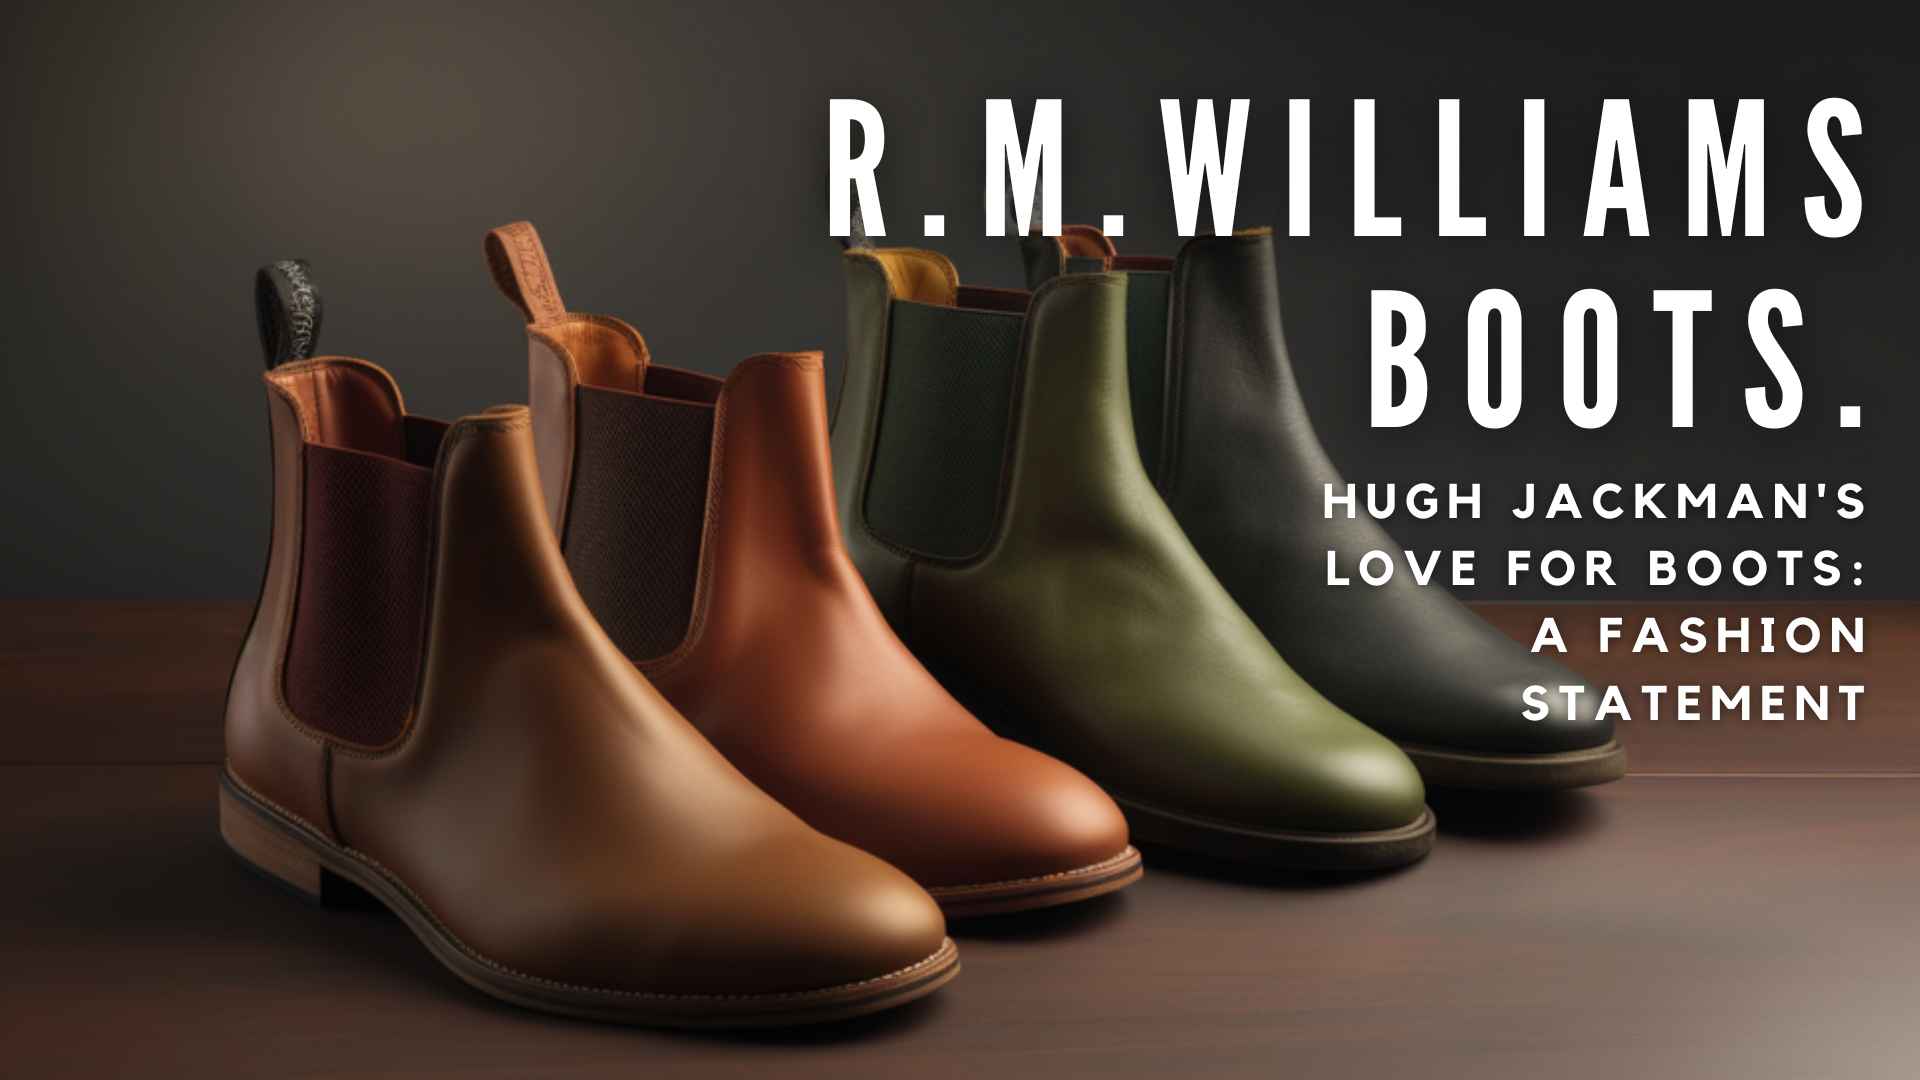 R.M. Williams Boots. Hugh Jackson is Brand Ambassador